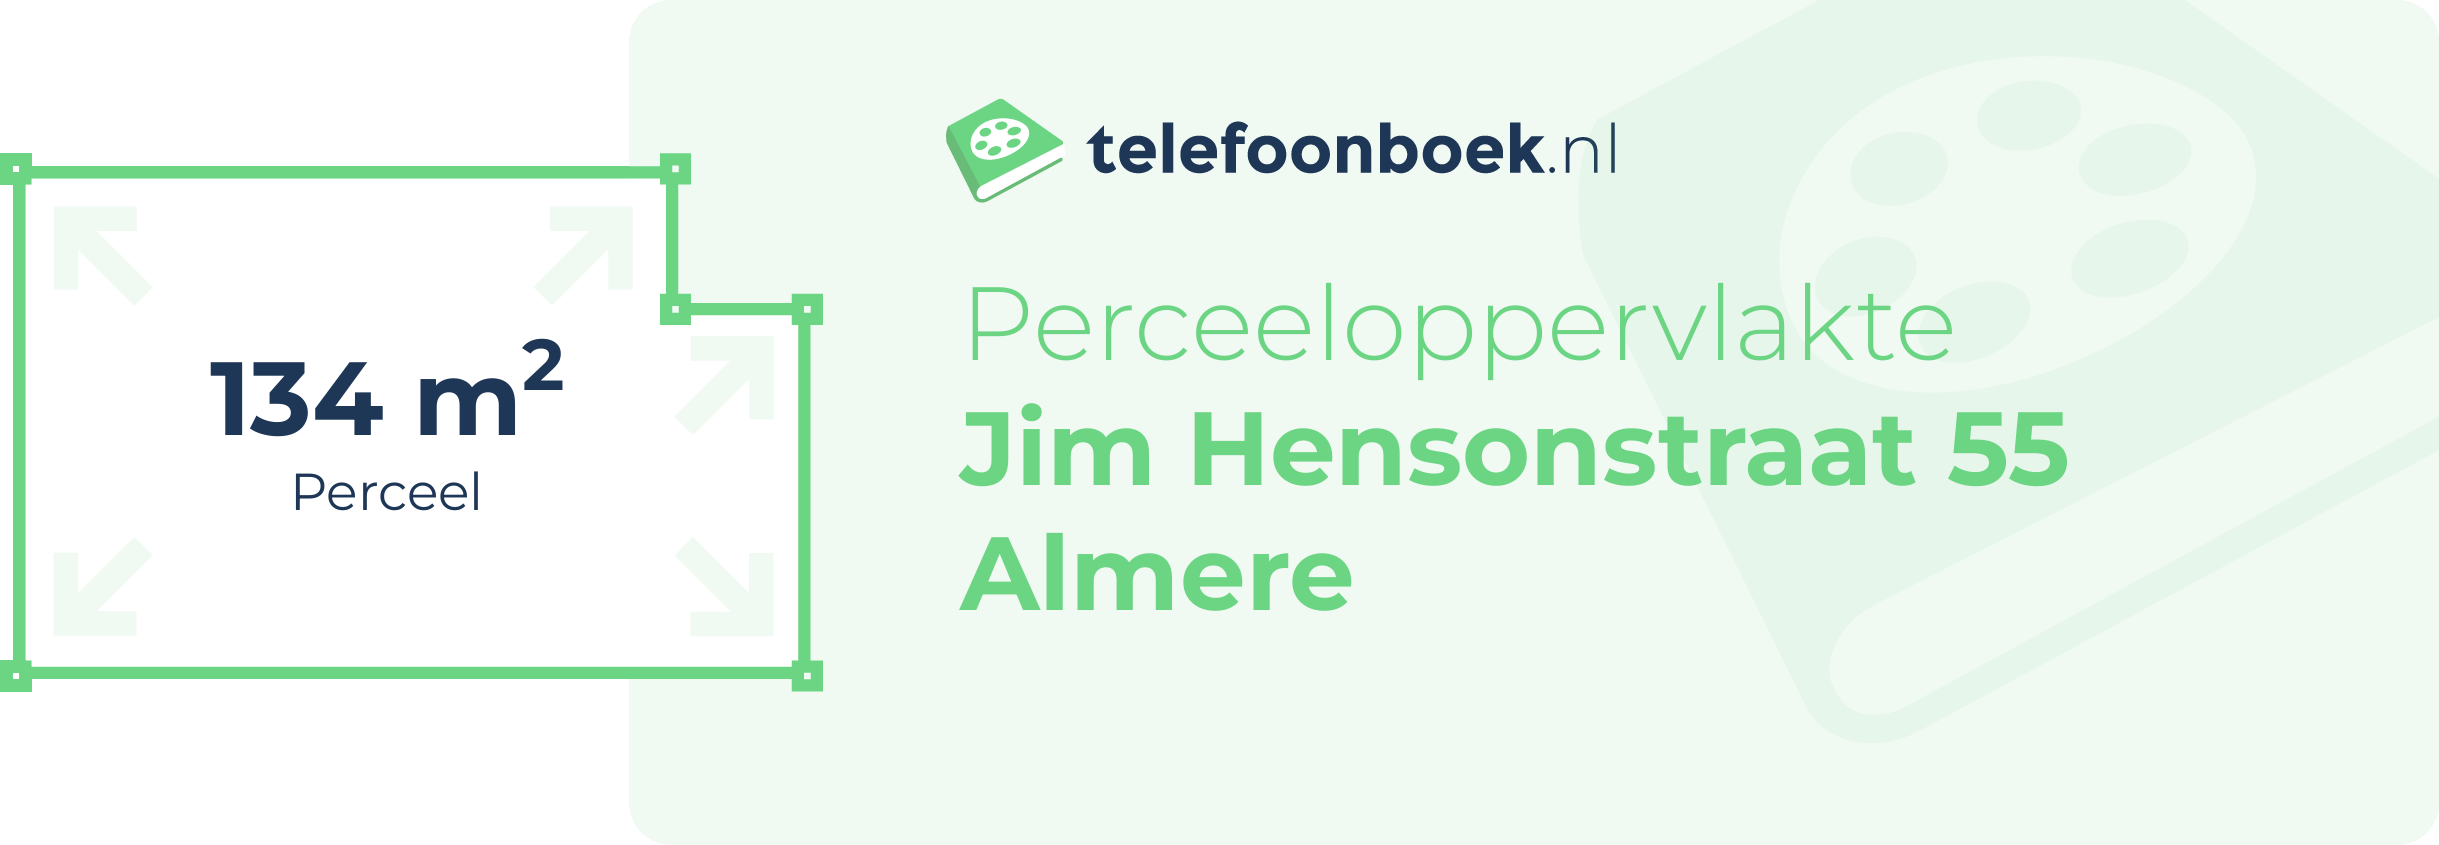 Perceeloppervlakte Jim Hensonstraat 55 Almere